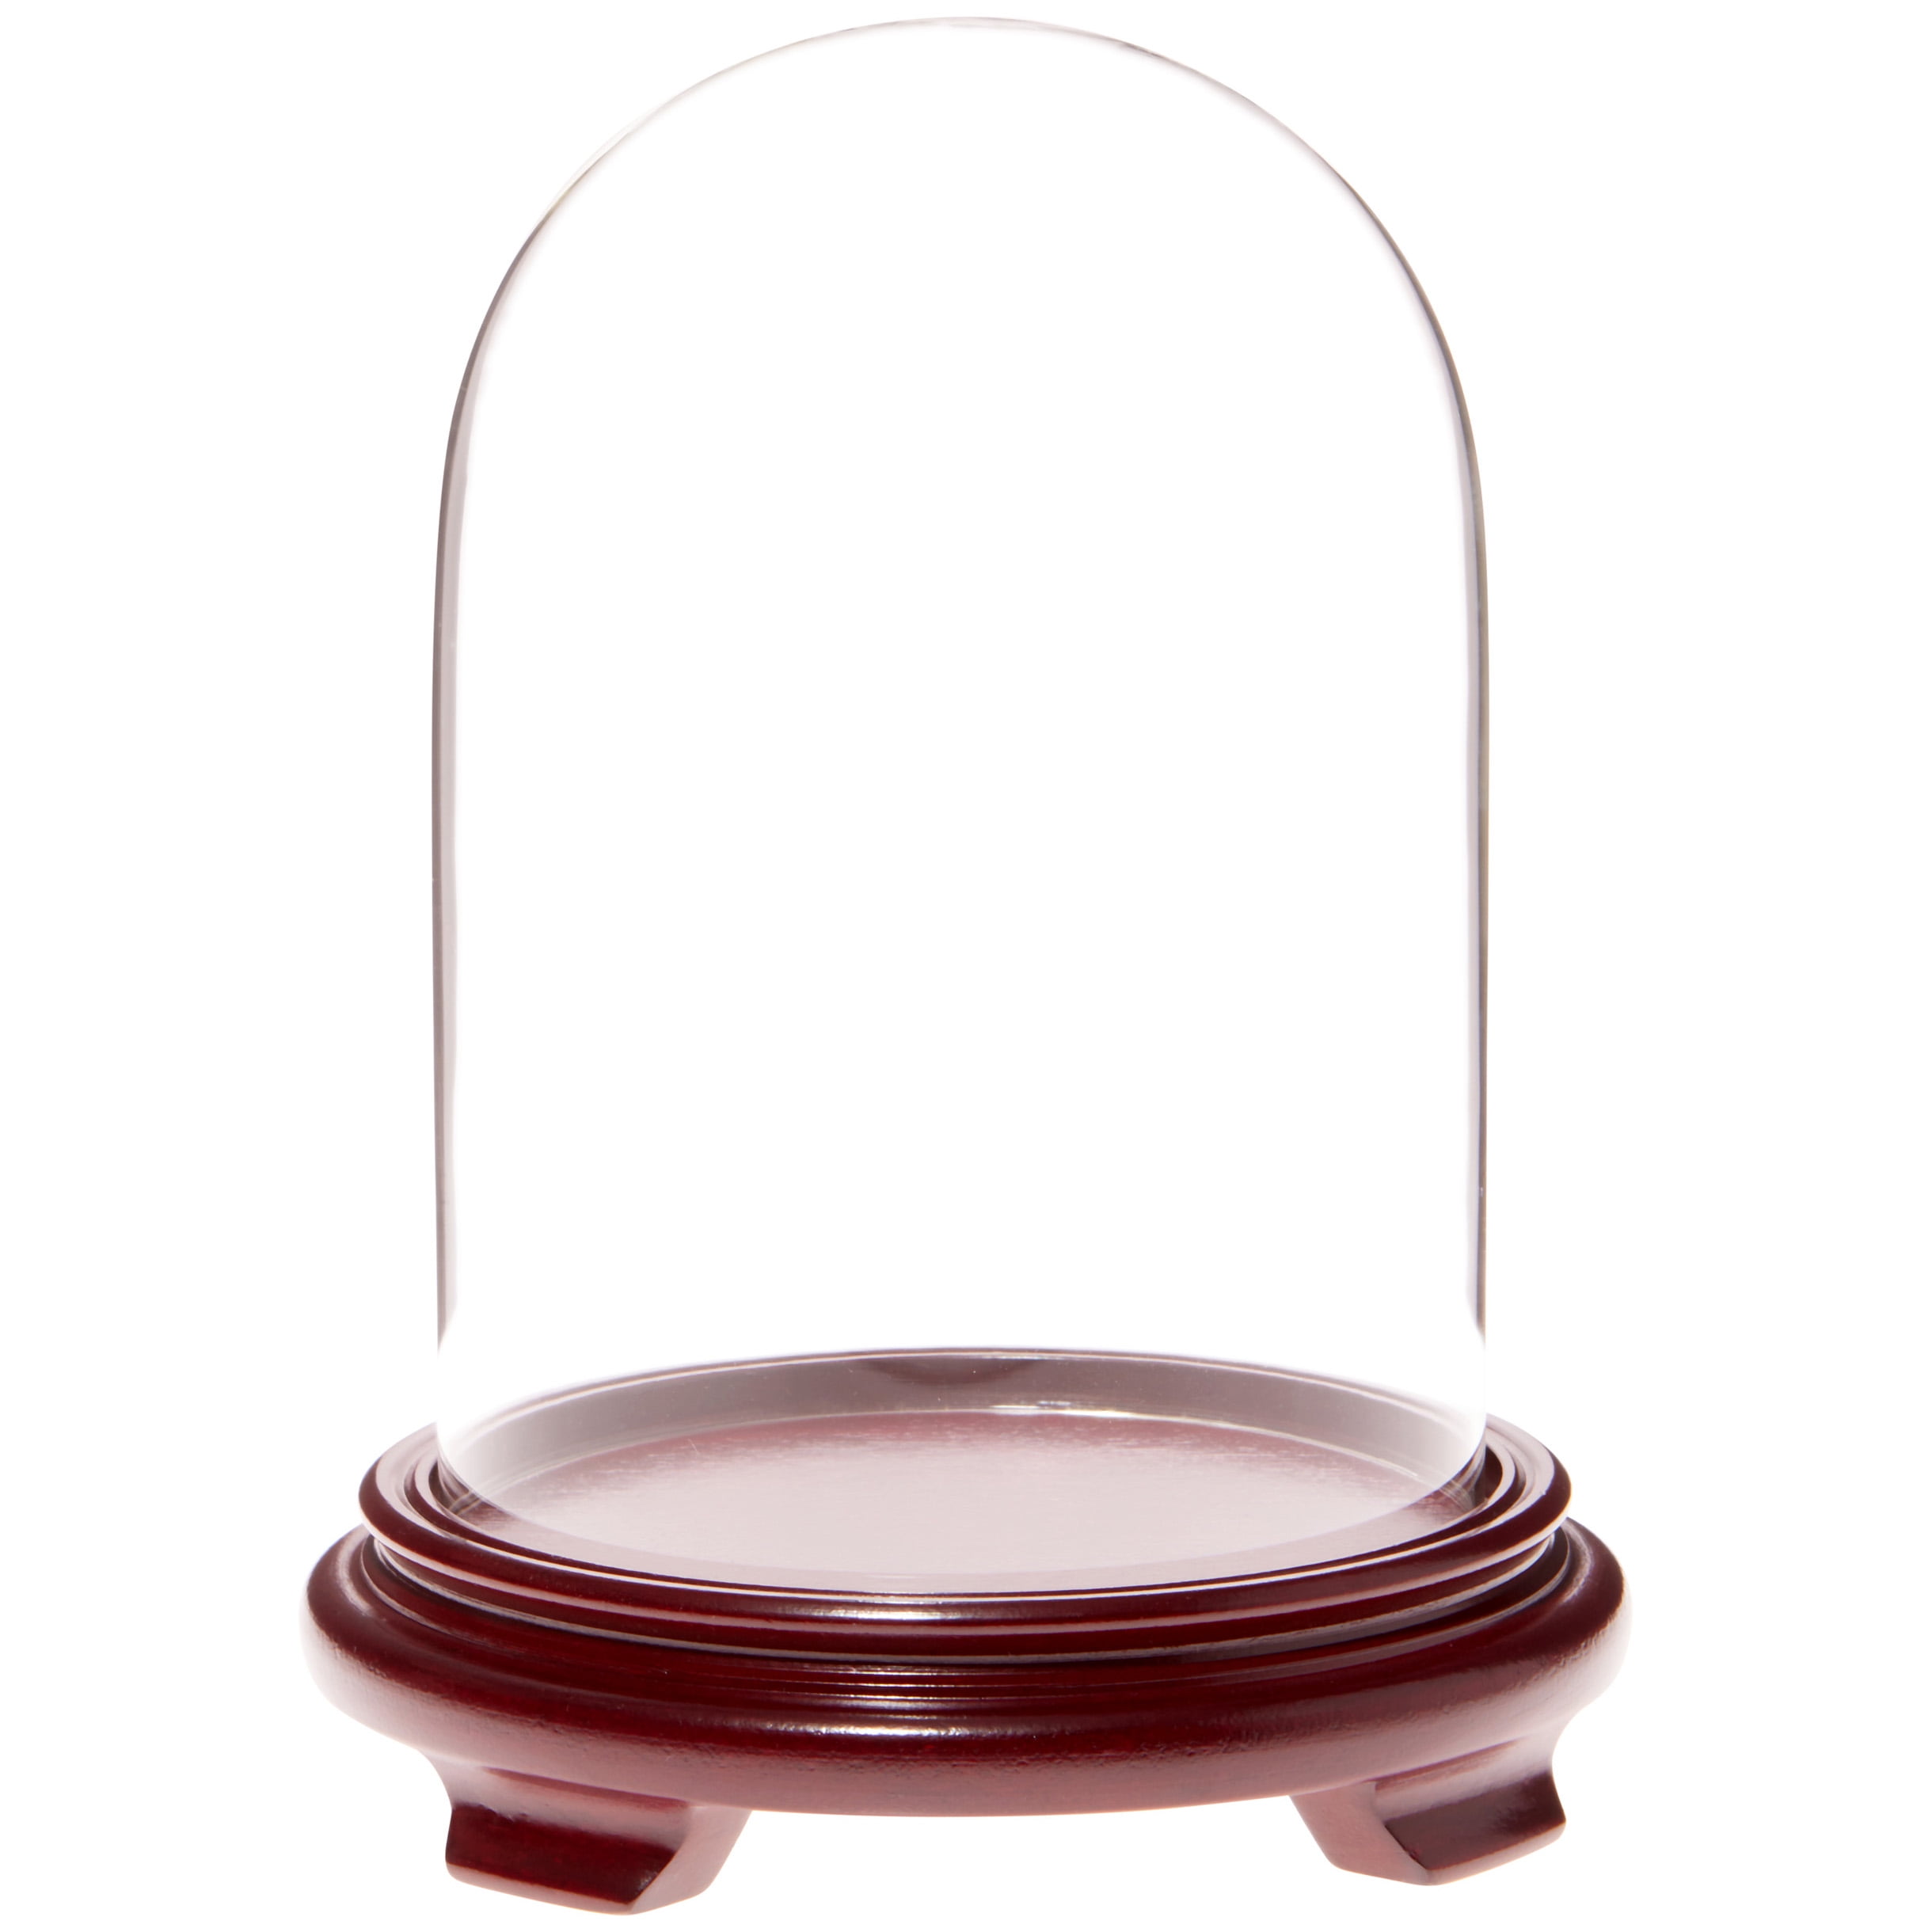 Interior size 4.75" x 5" Plymor 5" x 6" Bell Jar Glass Display Dome Cloche 